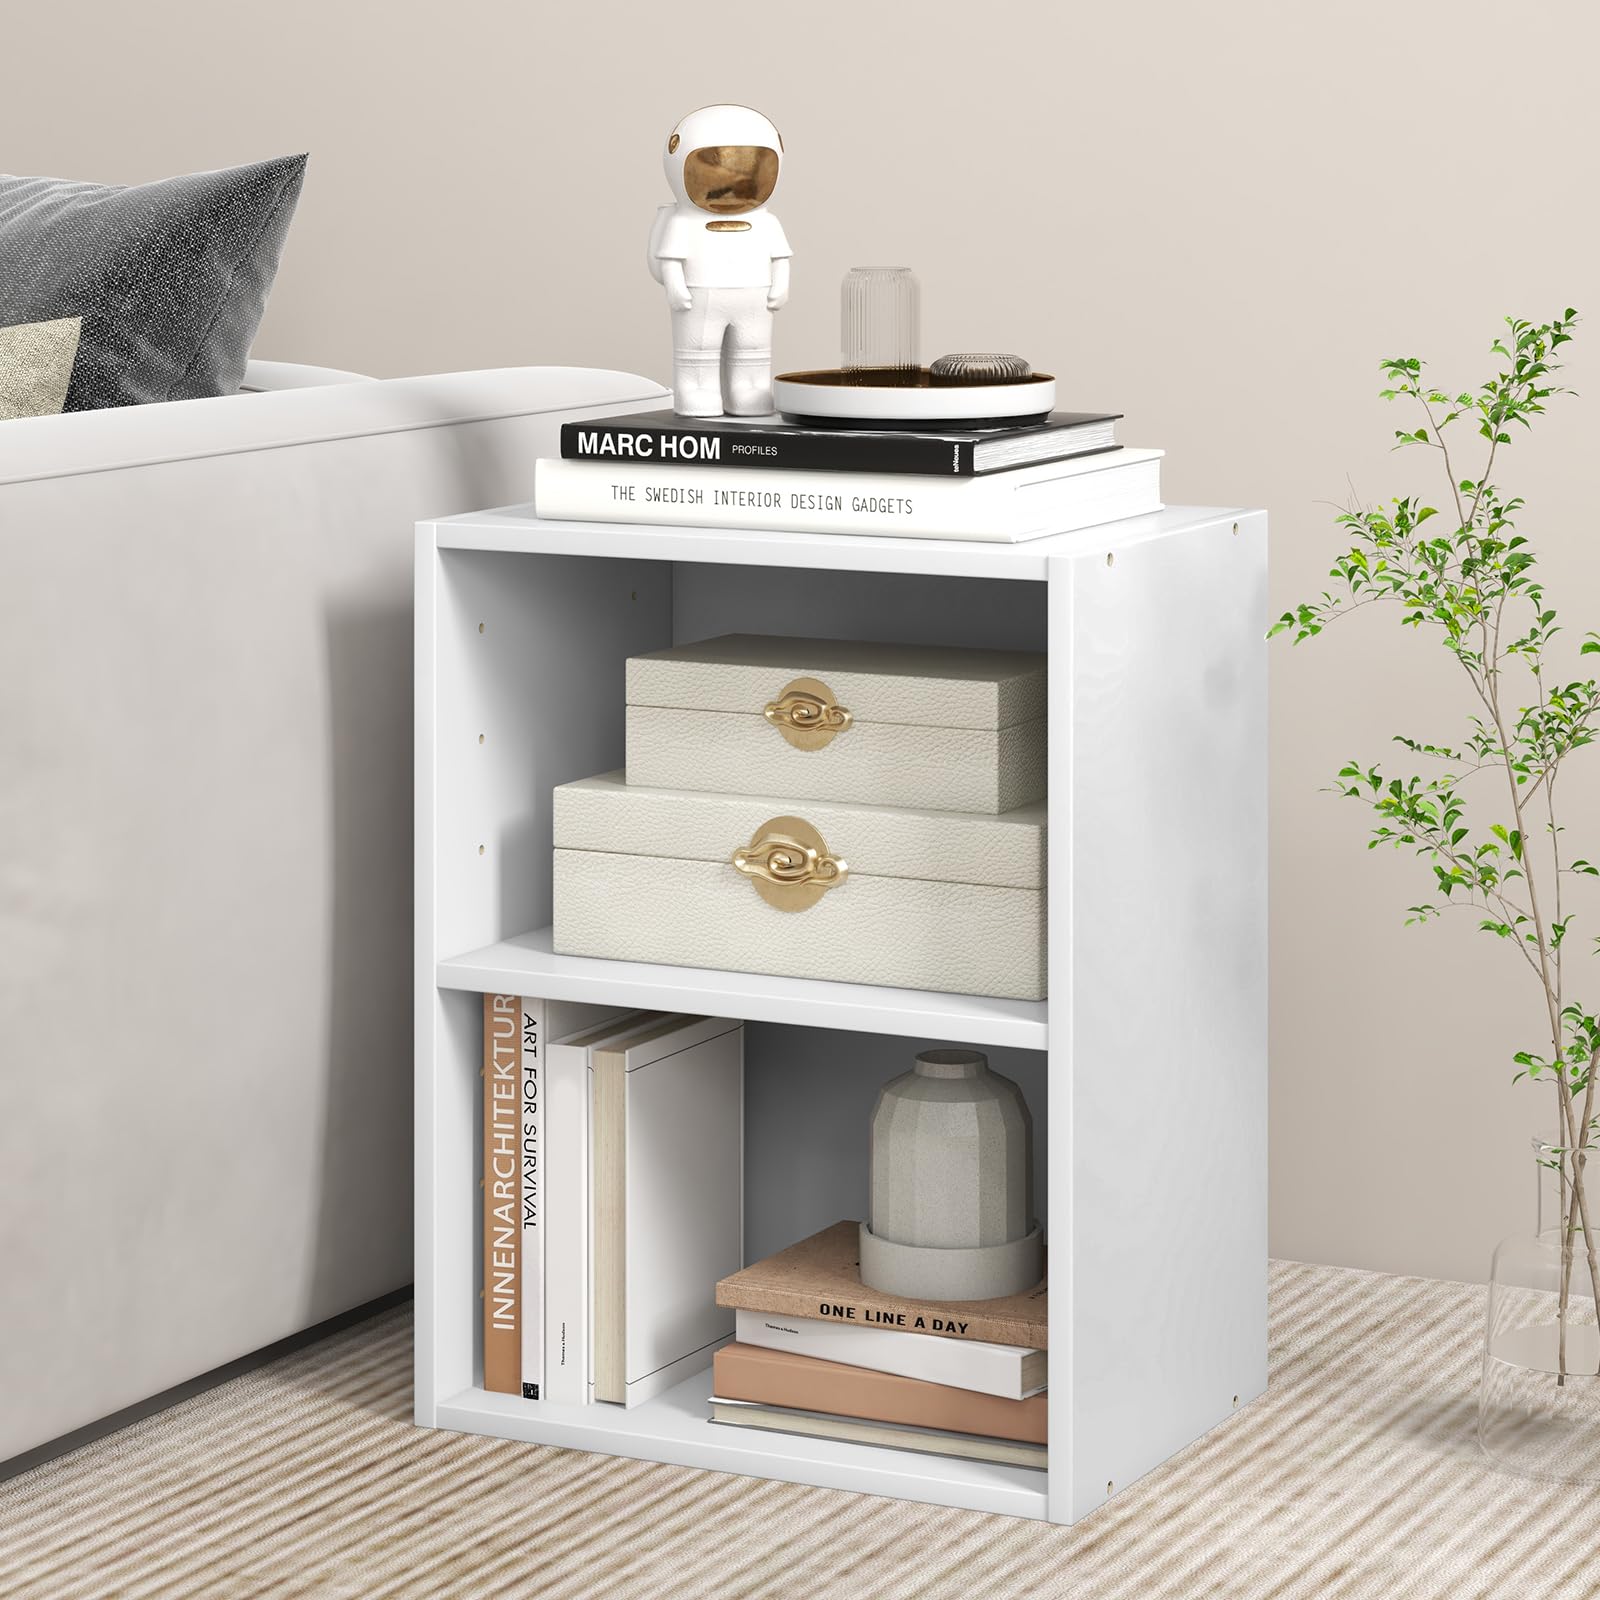 Giantex Bookshelf and Bookcase 2-layer Storage Shelf